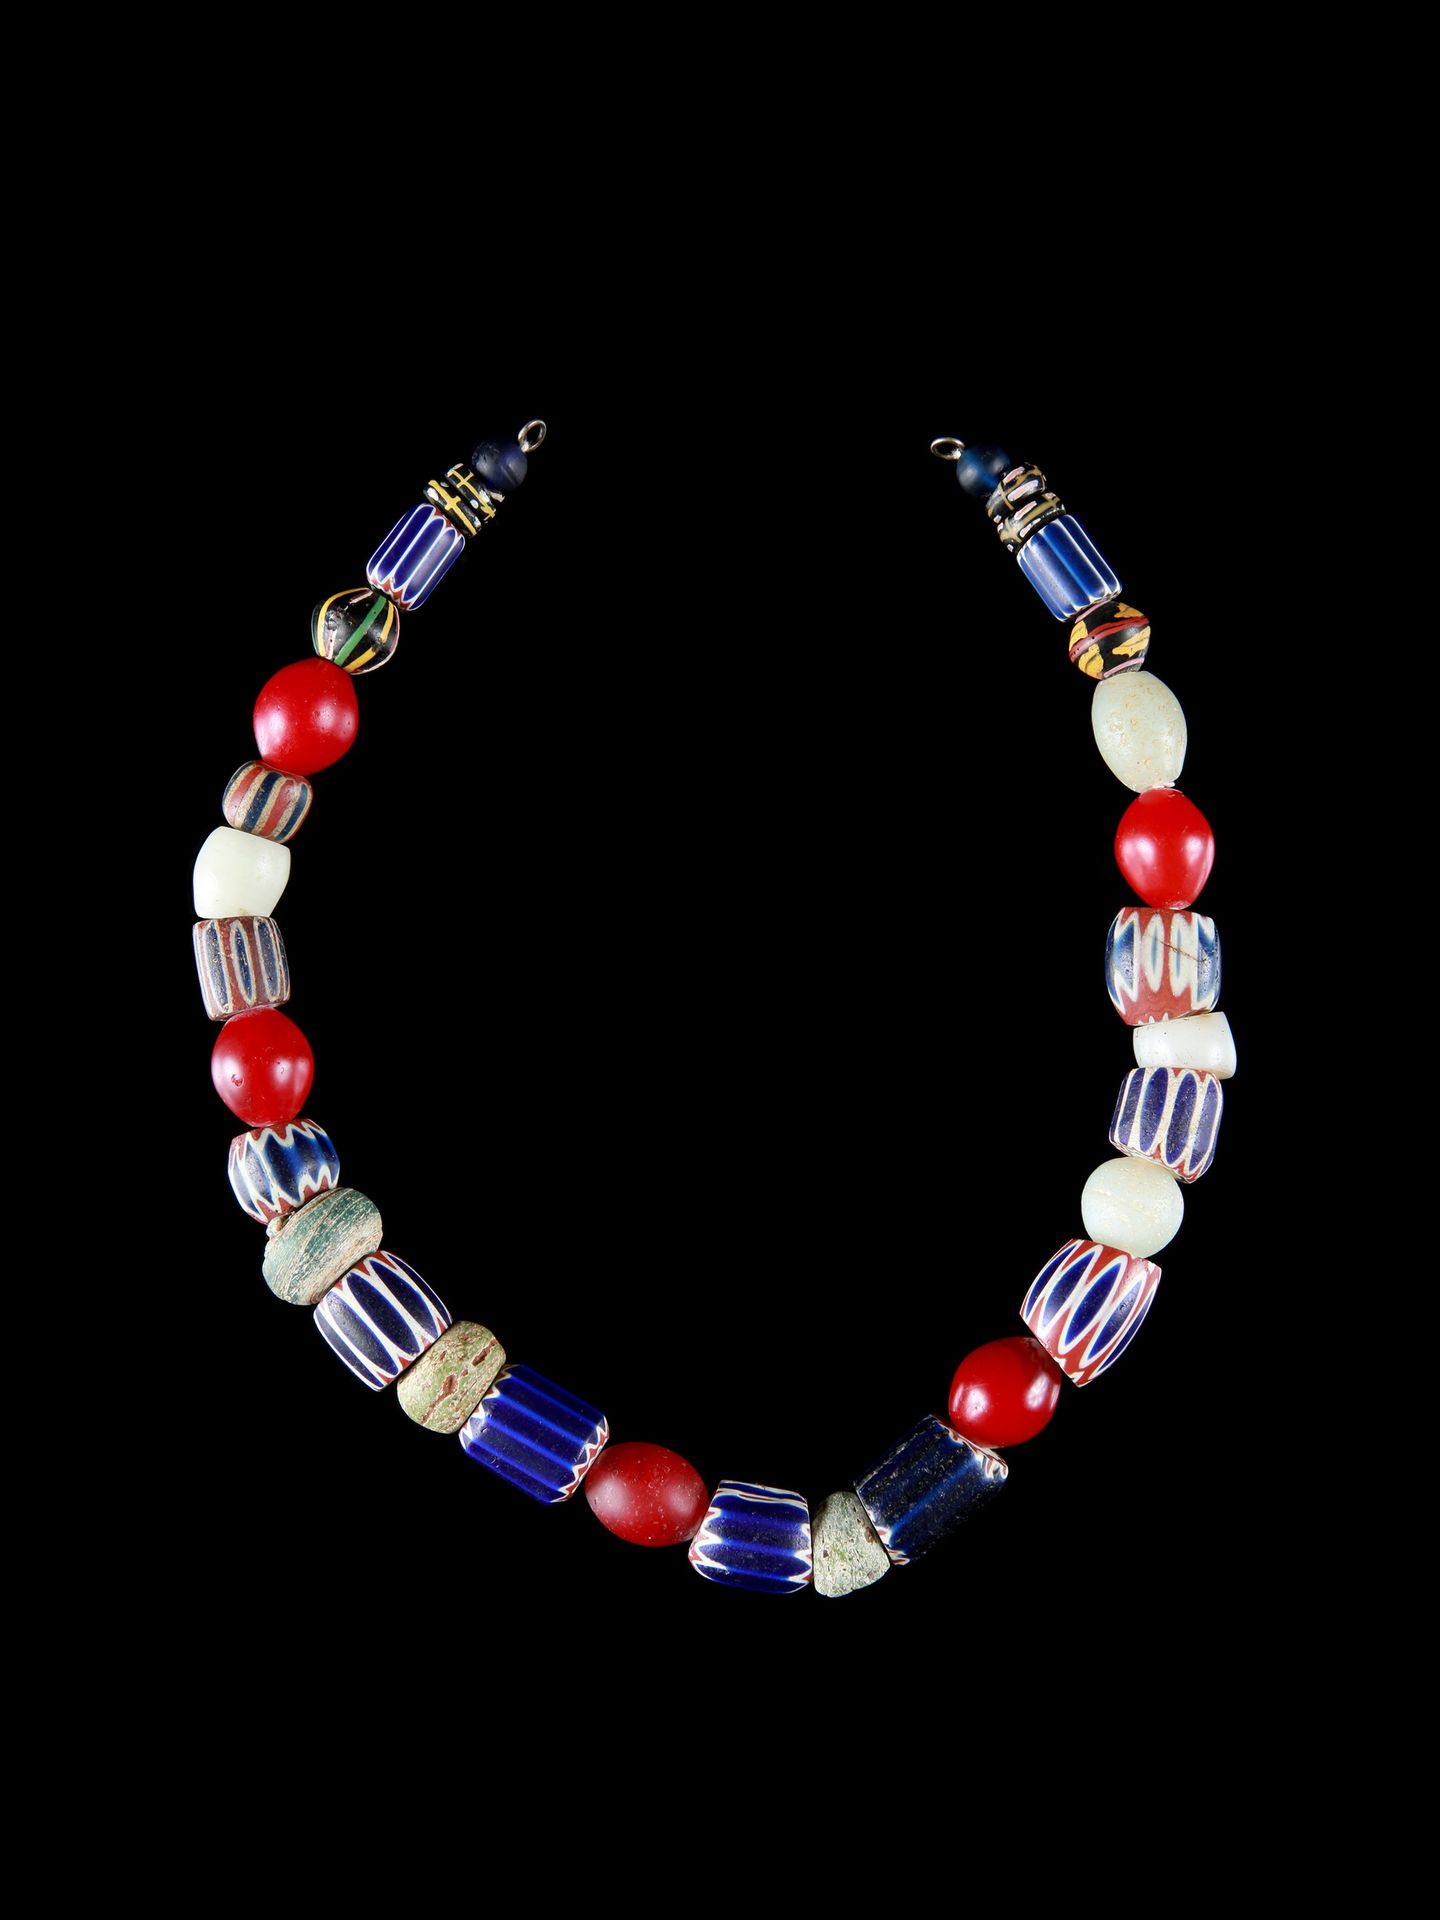 A Glass Beads Necklace Collar de cuentas de vidrio

Italia / África Occidental

&hellip;